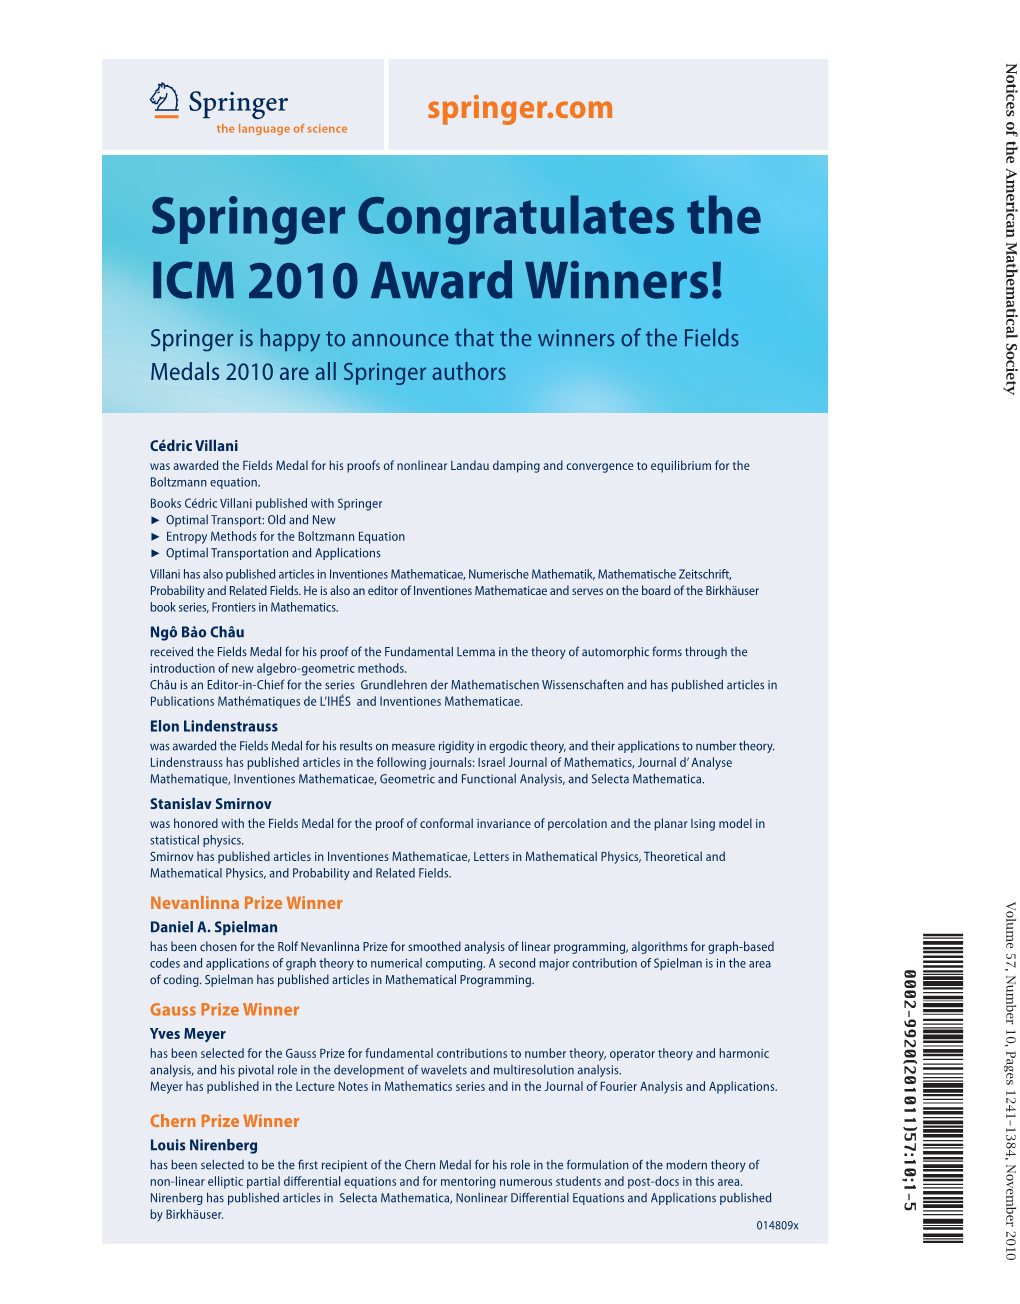 Springer Congratulates the ICM 2010 Award Winners!